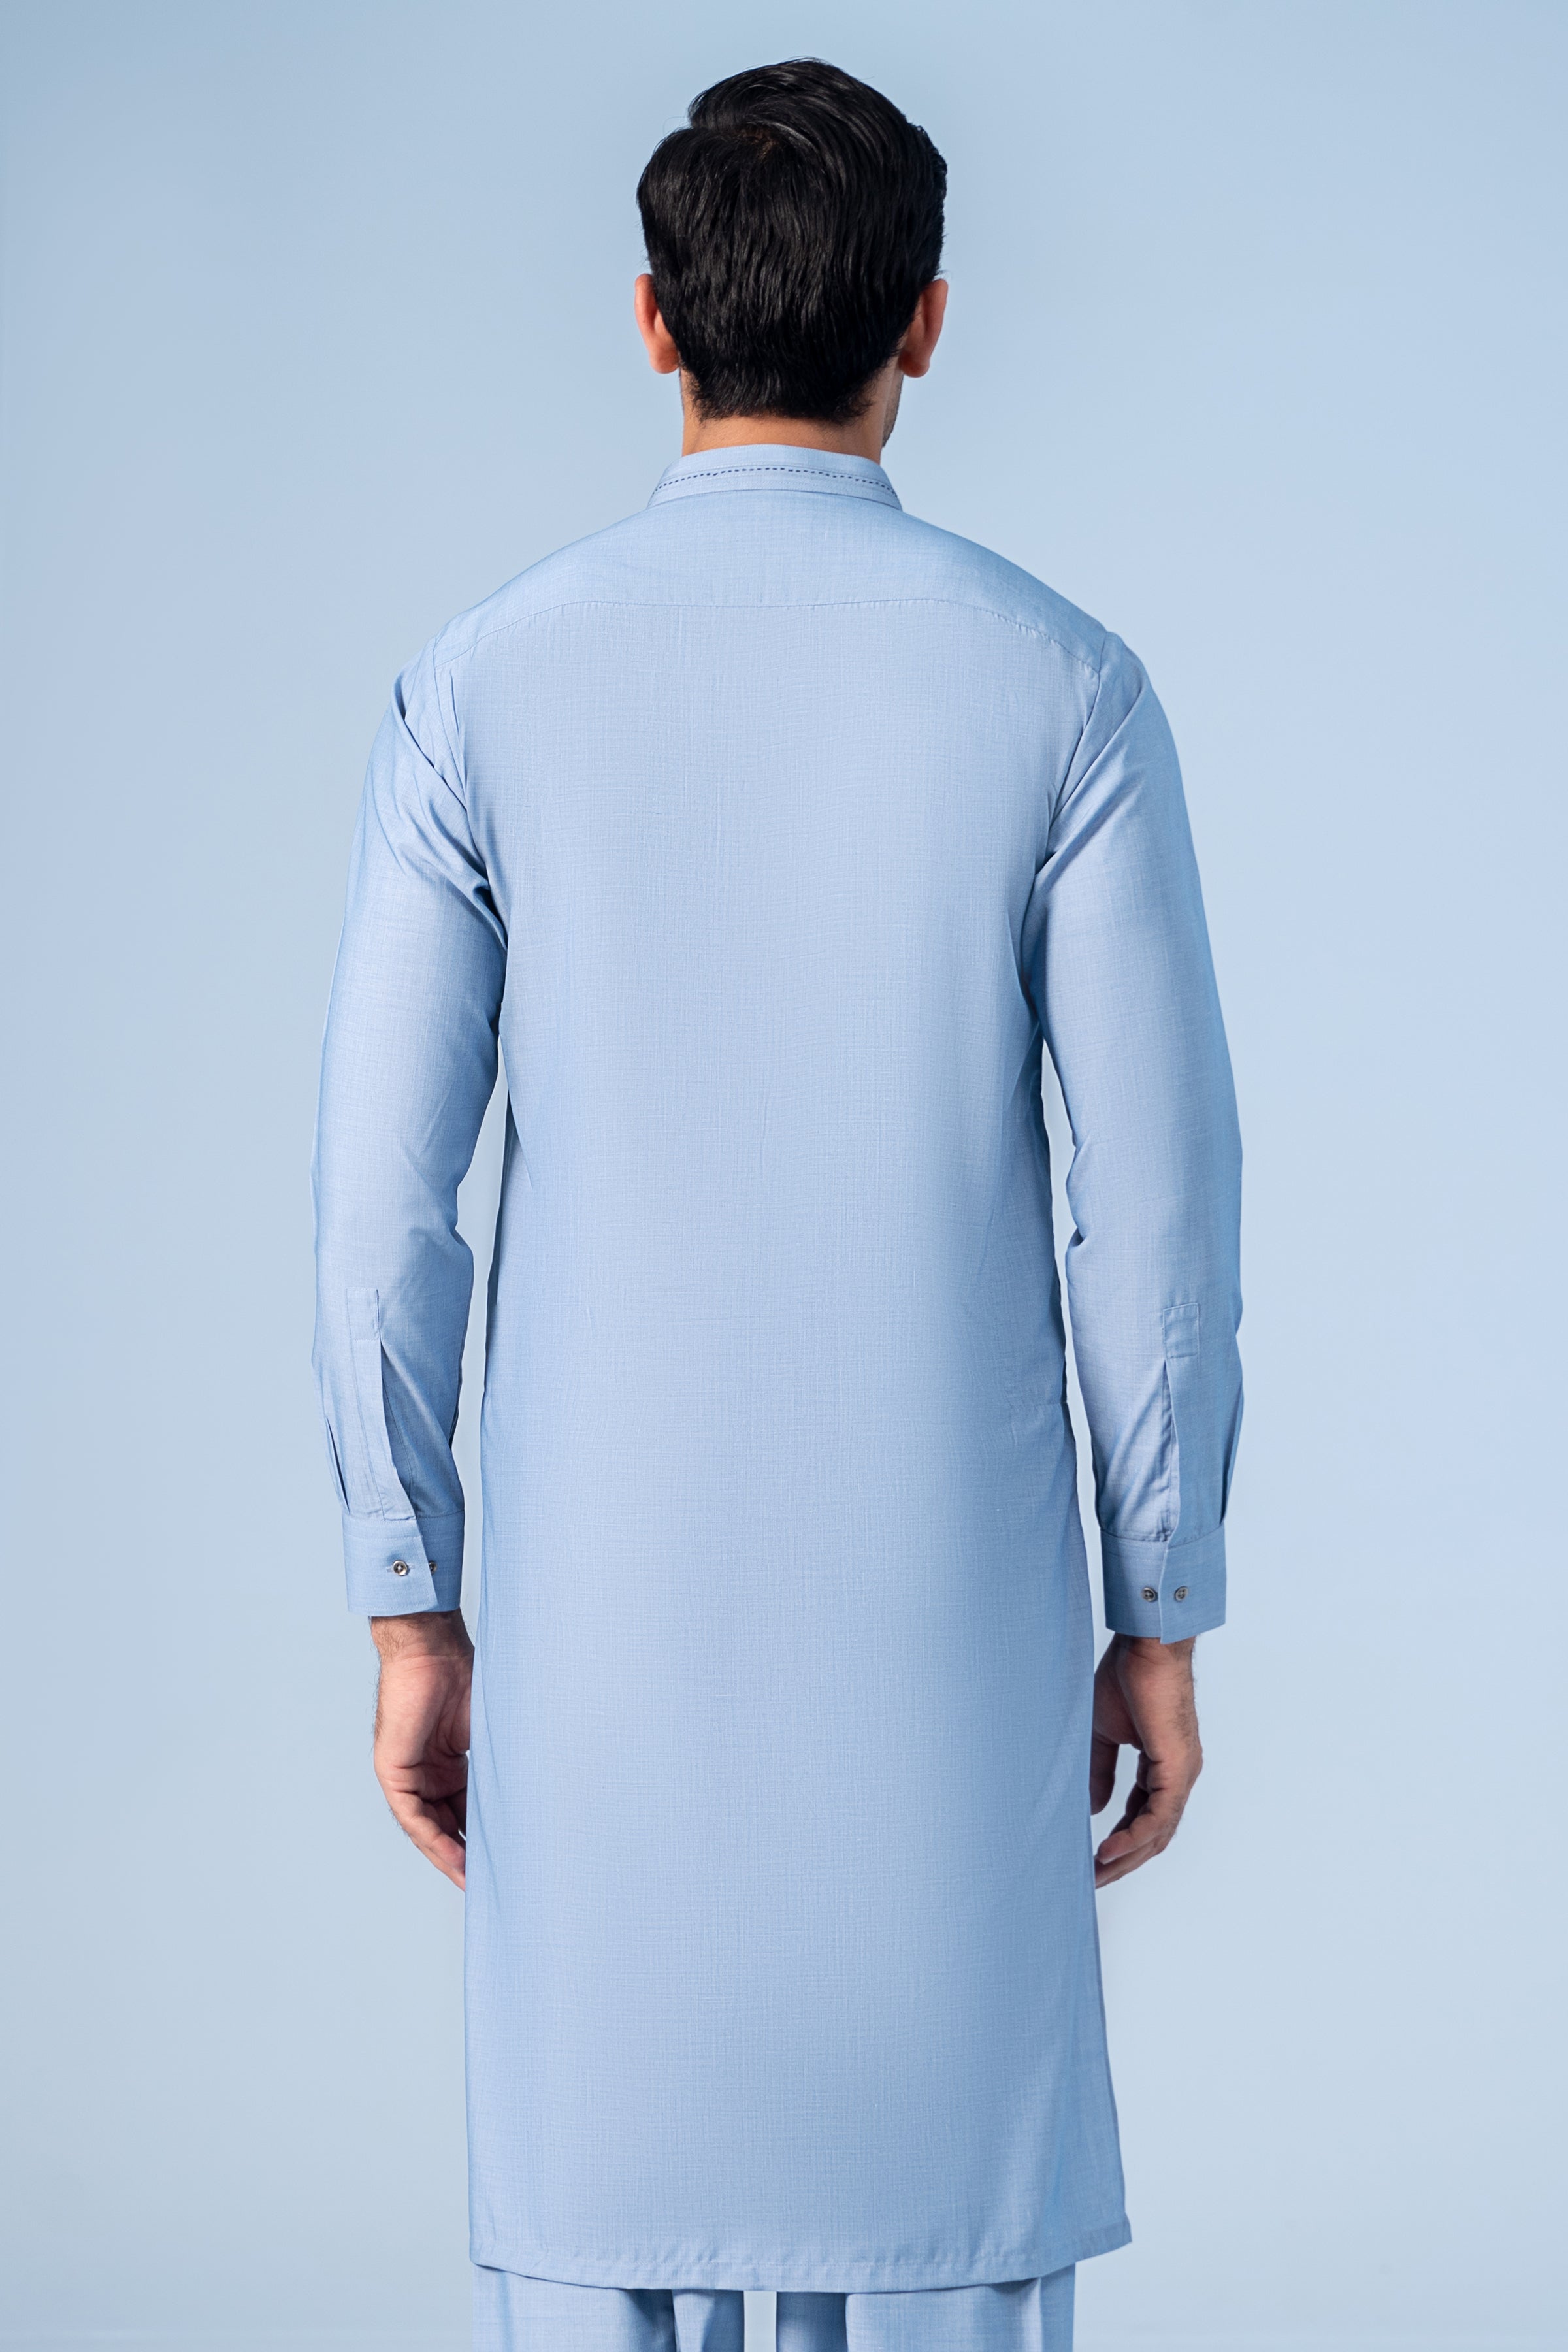 SHALWAR KAMEEZ MID BLUE - Charcoal Clothing